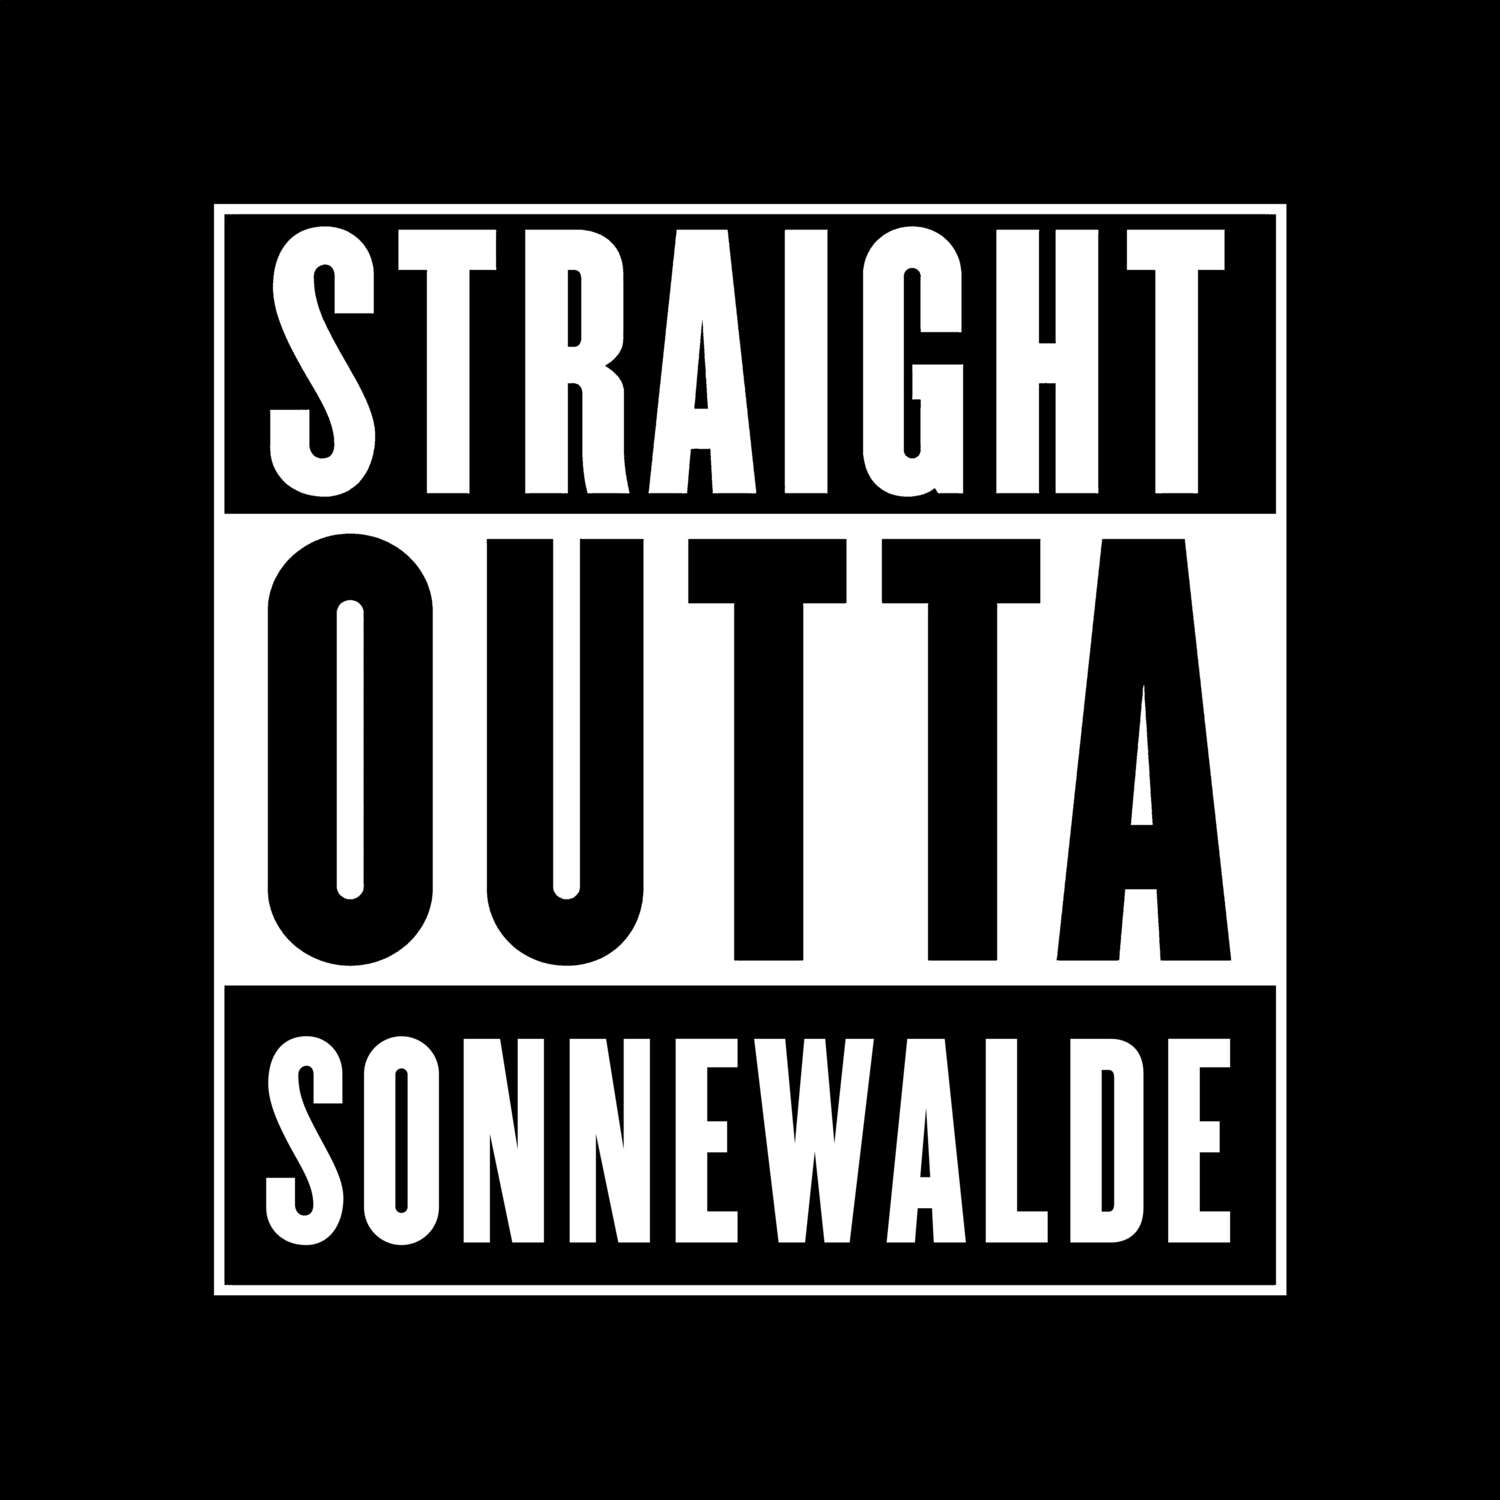 Sonnewalde T-Shirt »Straight Outta«